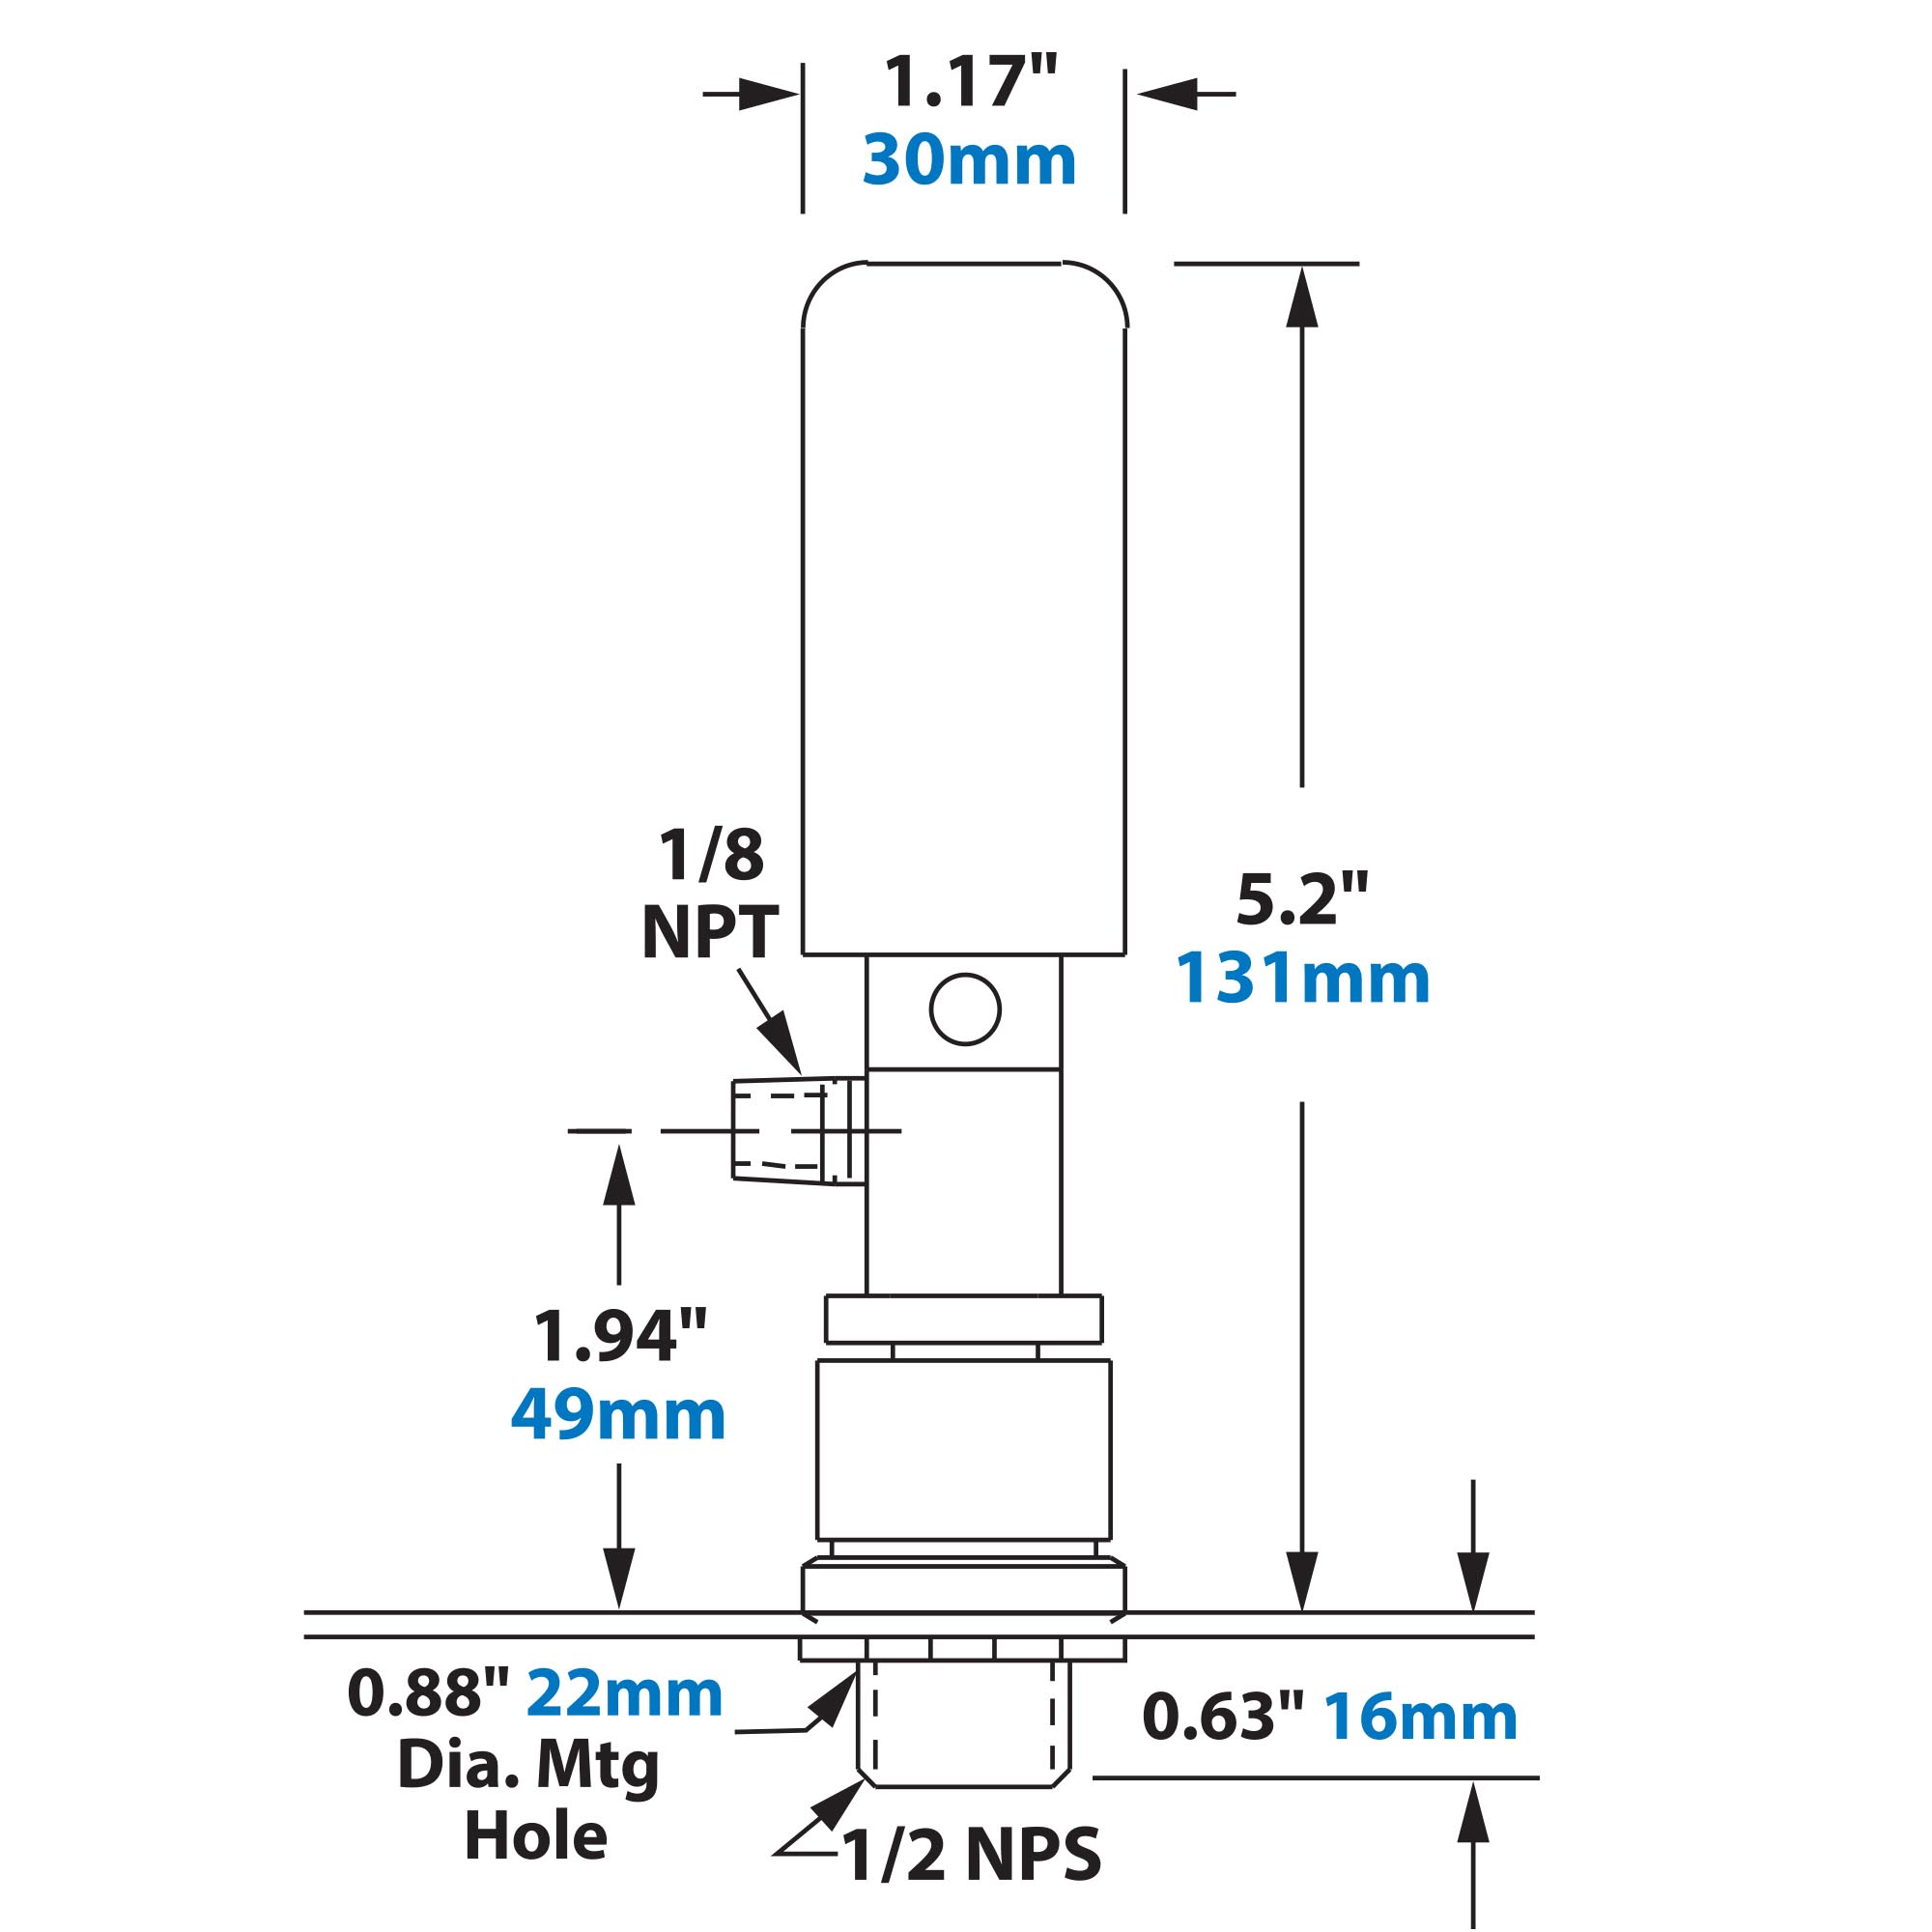 EXAIR small NEMA 12 Cabinet Cooler Dimensions